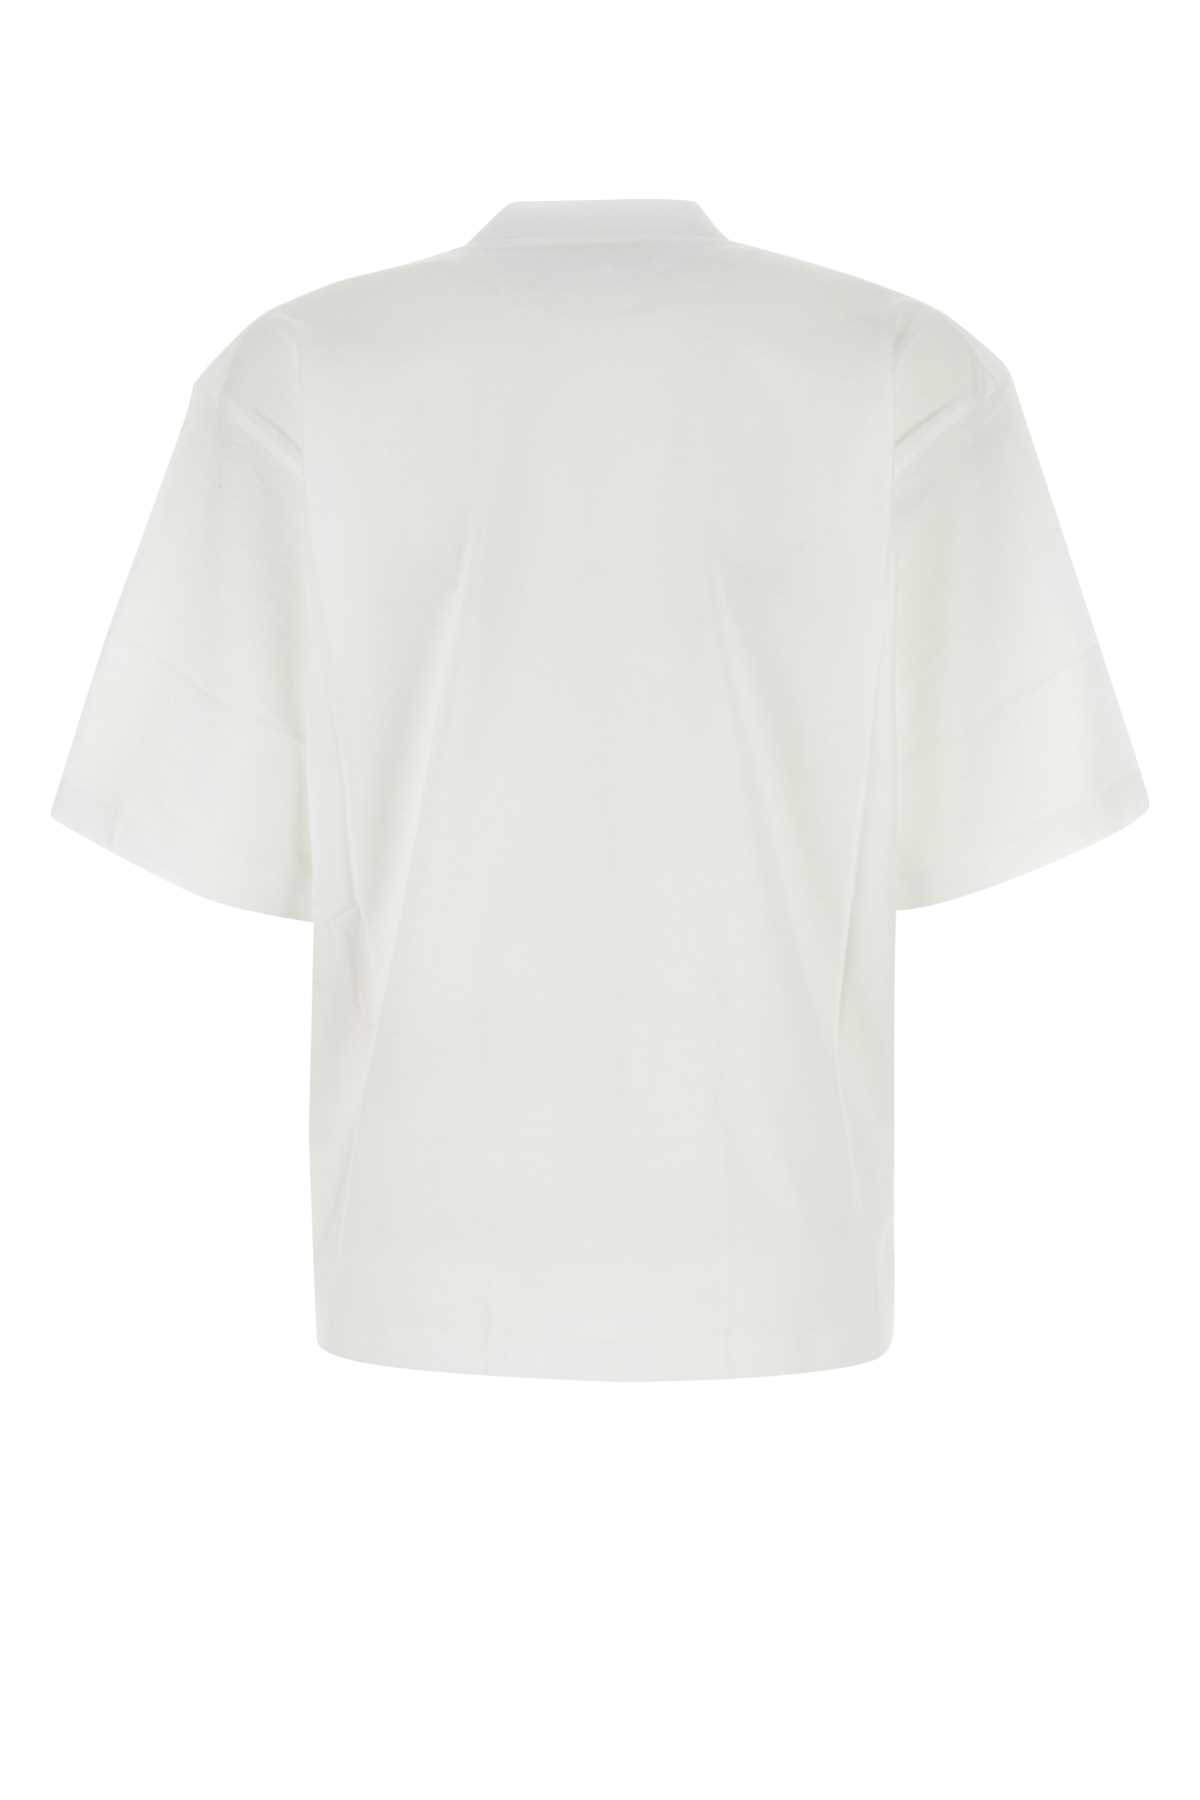 Marni White Cotton Oversize T-shirt In Lilywhite